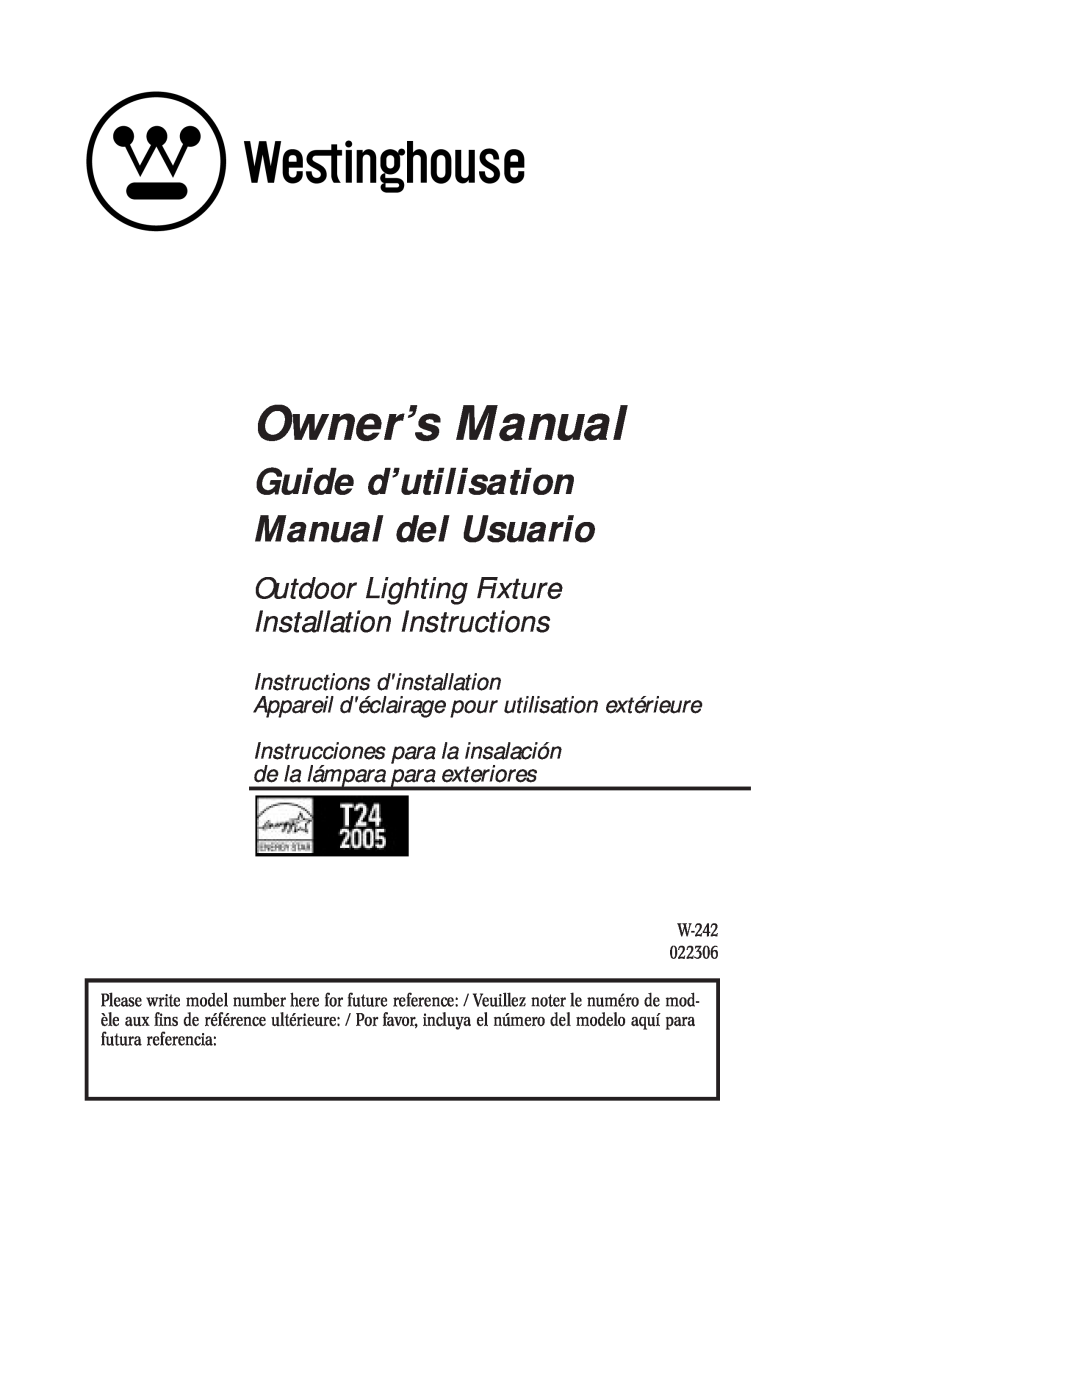 Westinghouse 36309, 36308, 36310 owner manual Guide d’utilisation Manual del Usuario, Outdoor Lighting Fixture 